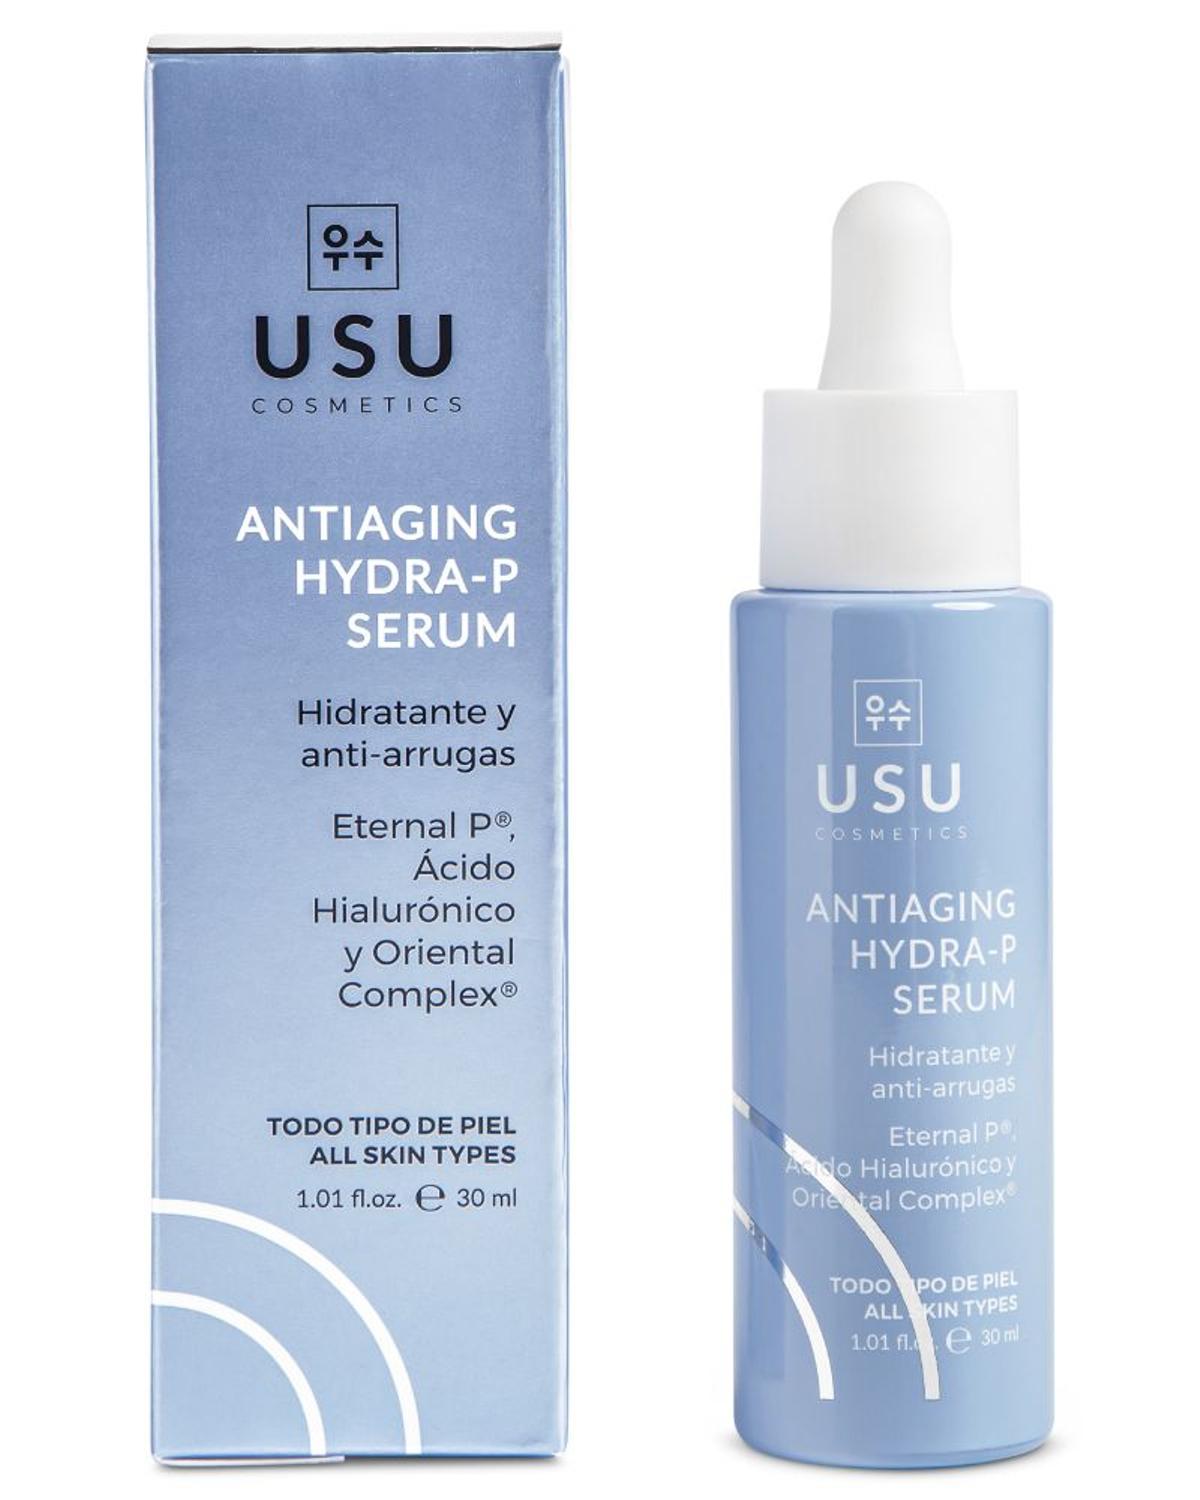 Antiaging Hydra-P Serum, de Usu Cosmetics